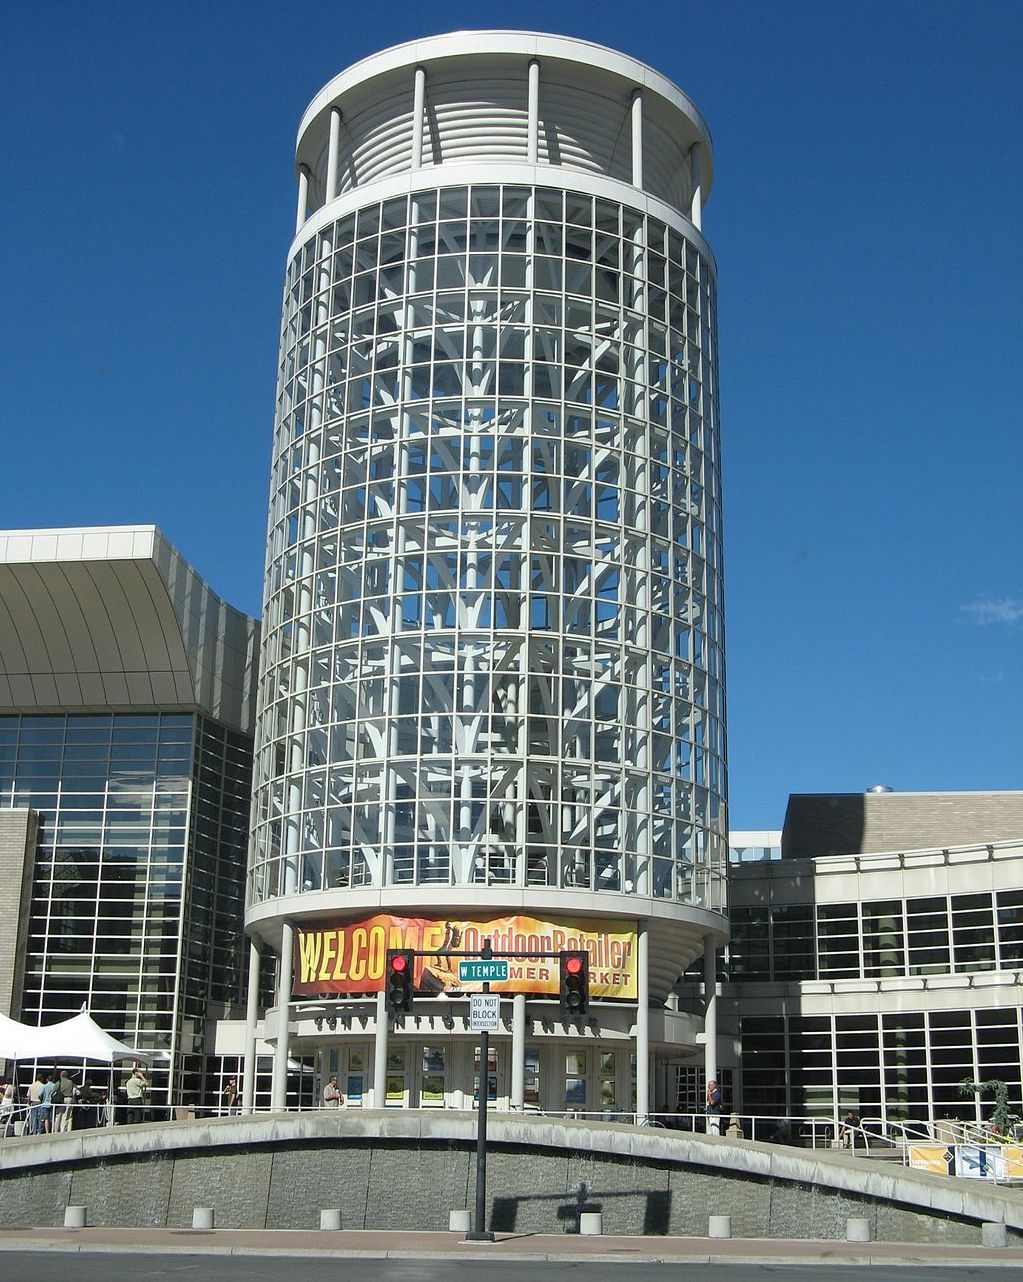 The Salt Palace Convention Center in Salt Lake City, Utah, hosts the Outdoor Retailer. [Photo] hakkun, Wikimedia